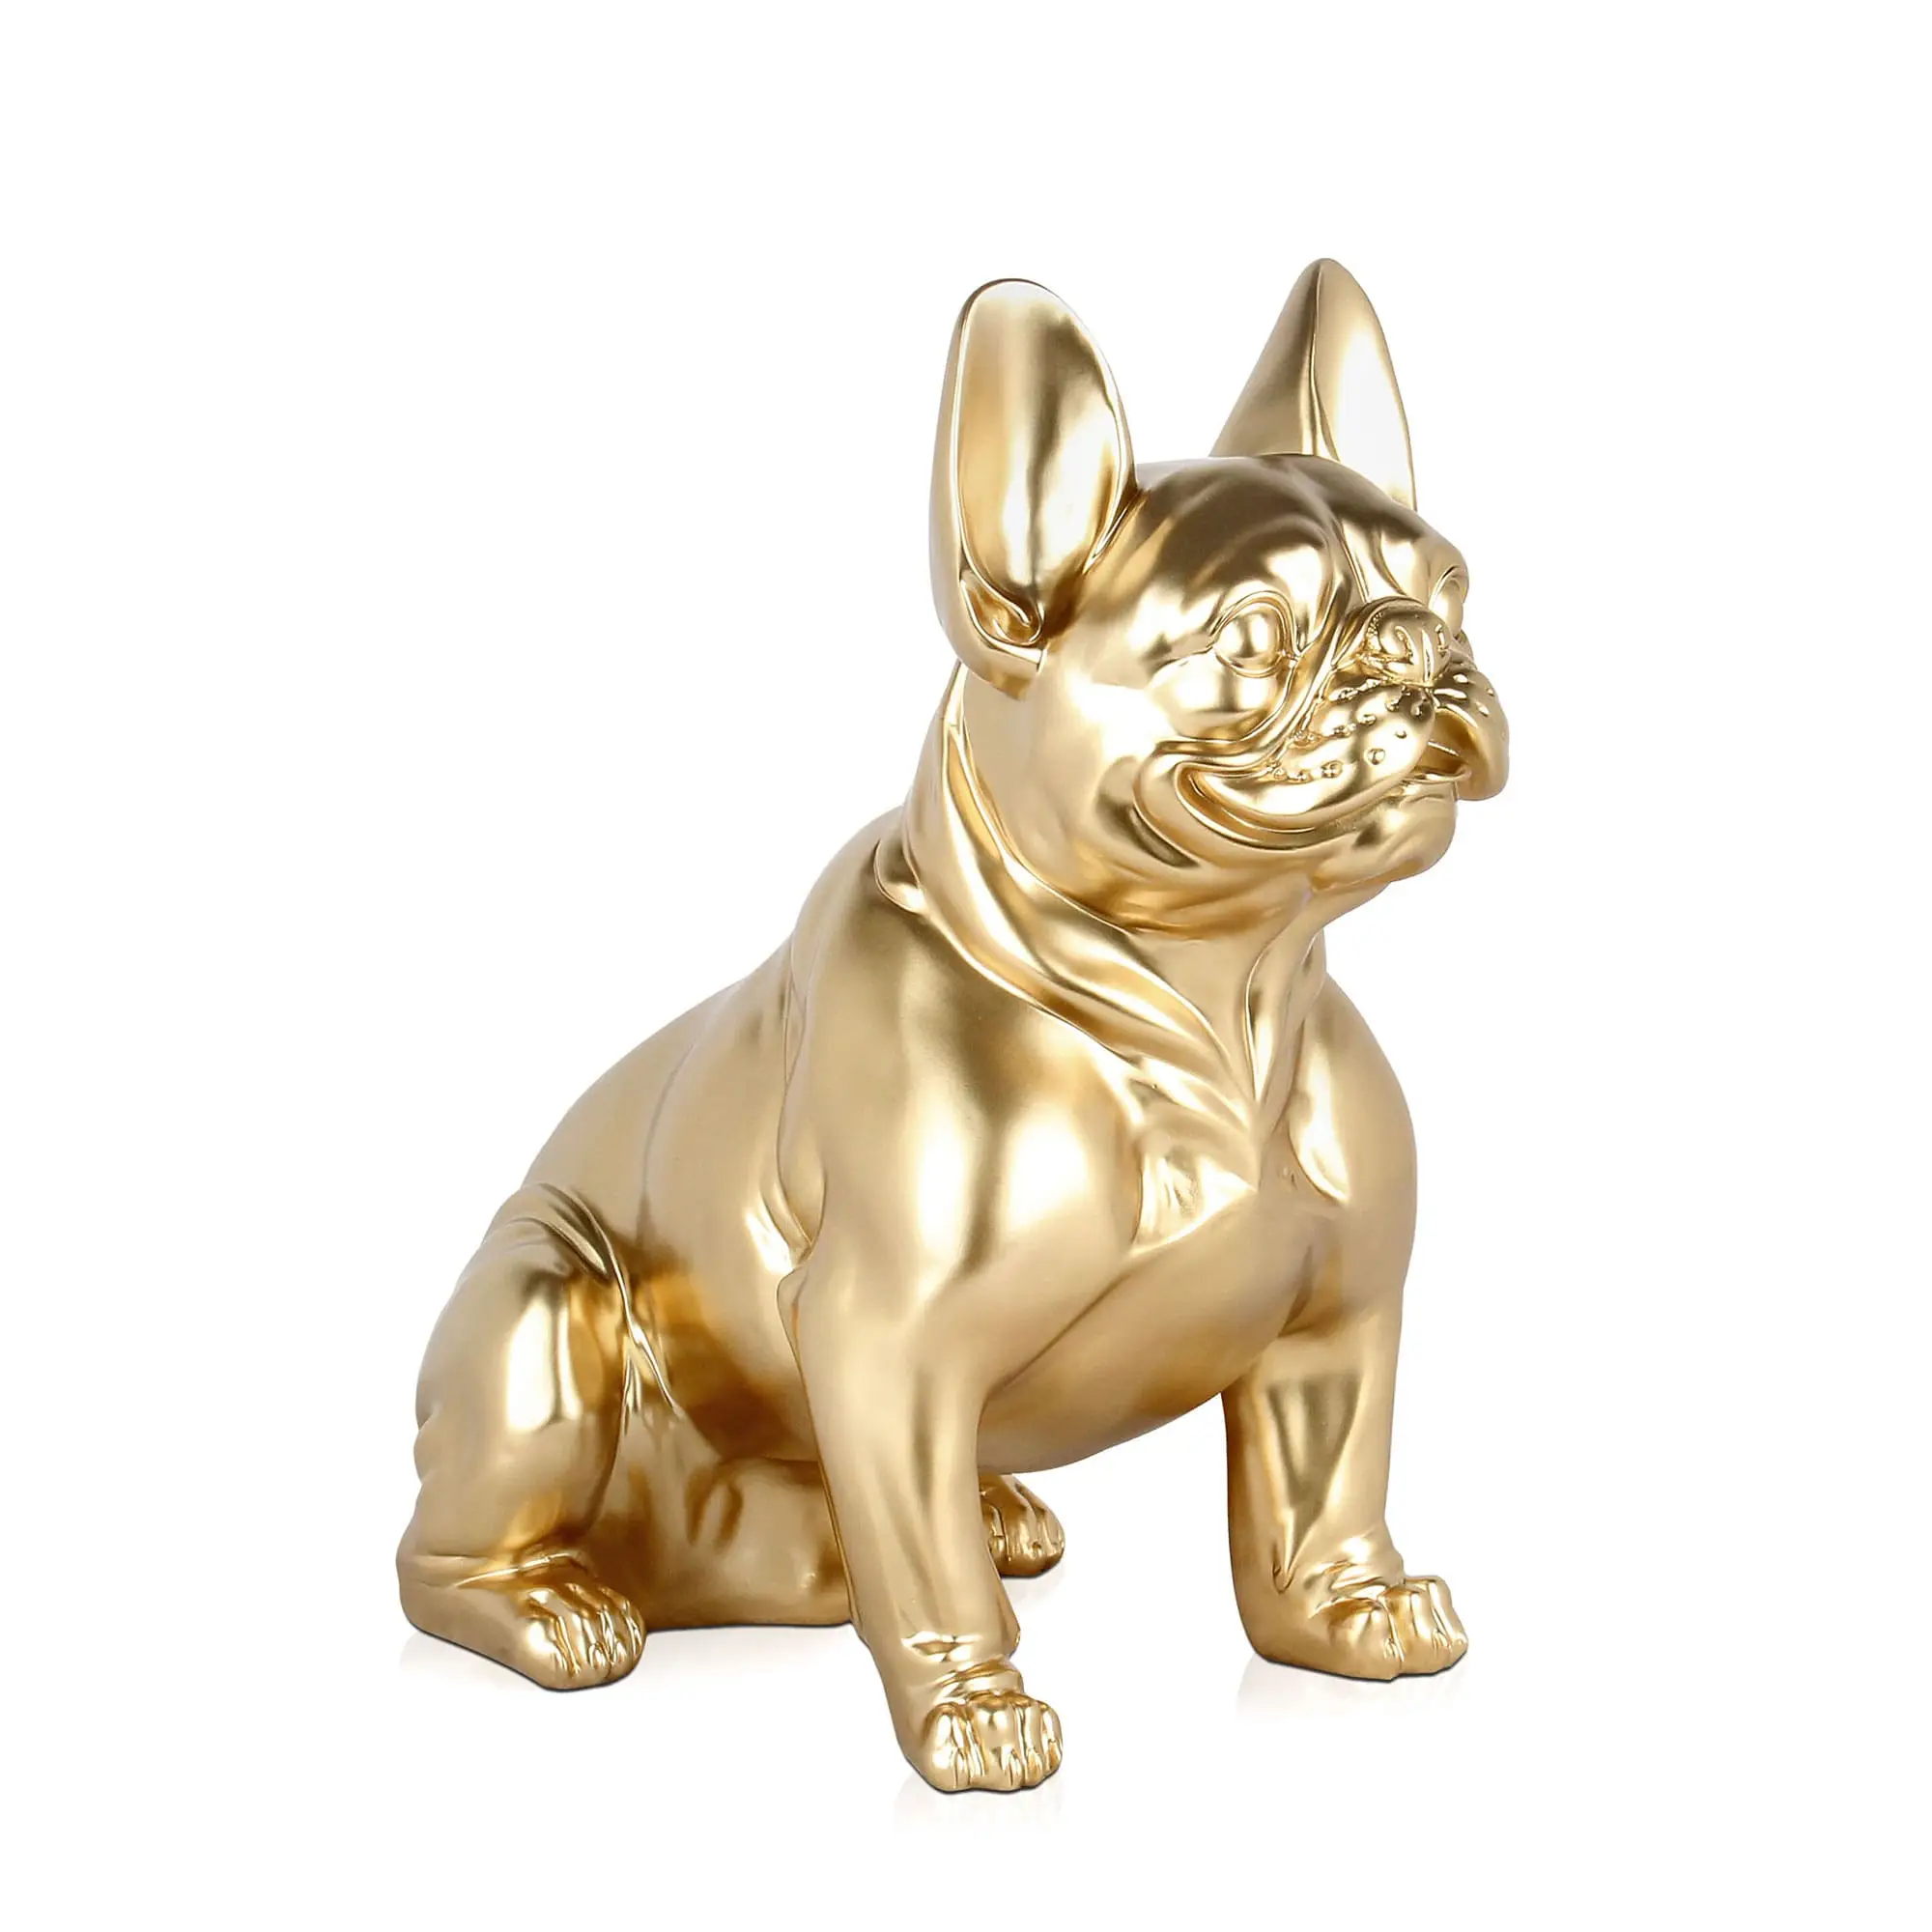 Franz枚sische Bulldogge Sitzende Skulptur